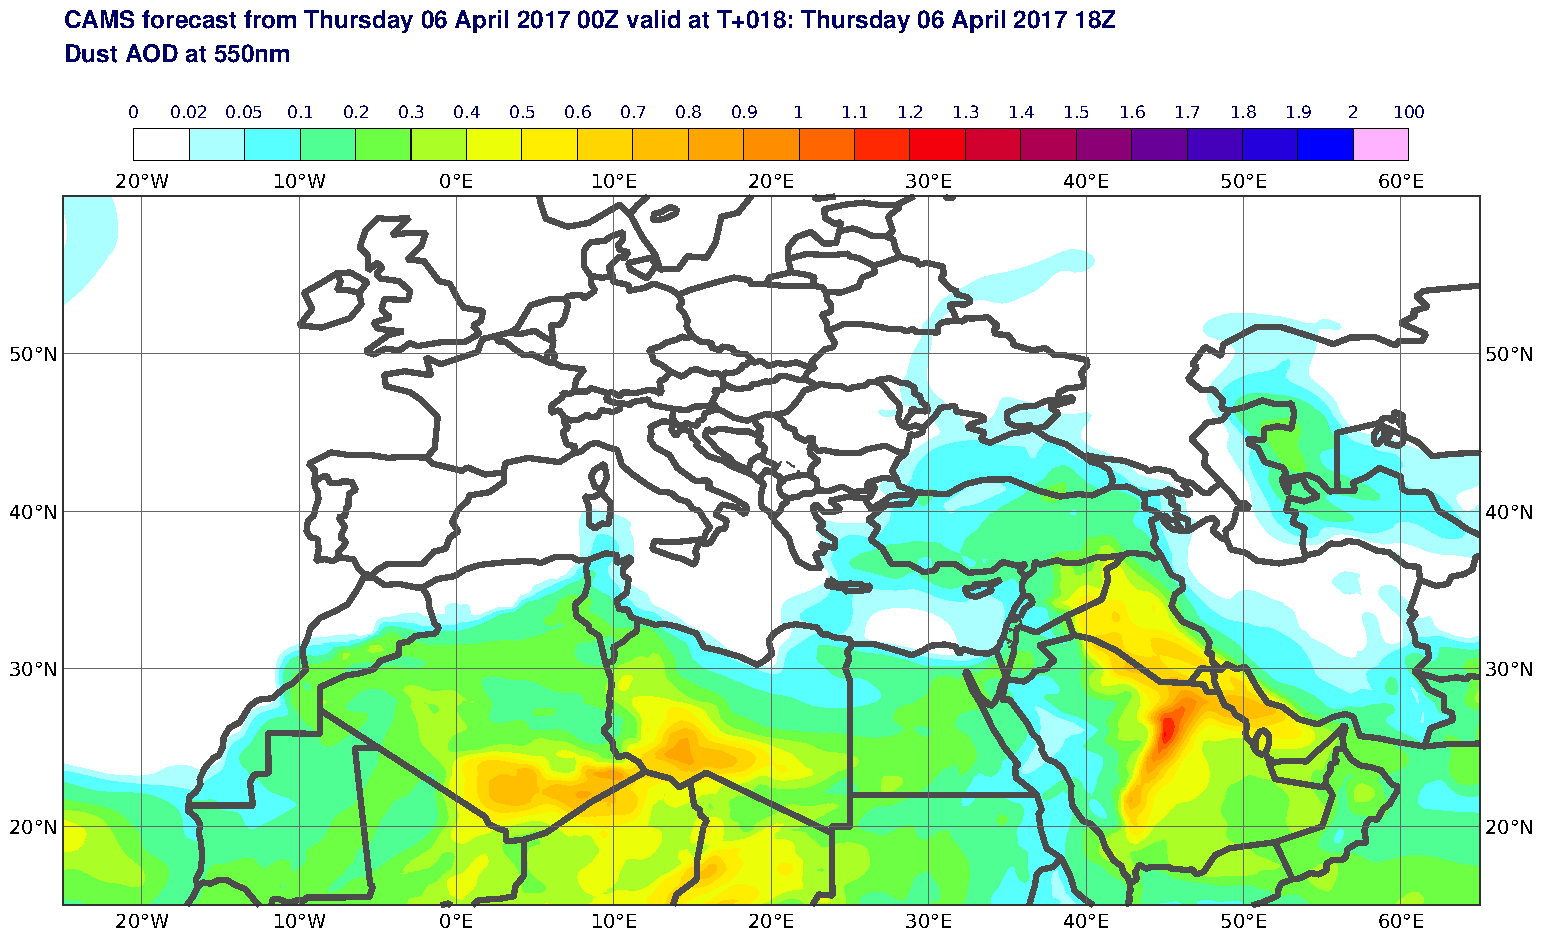 Dust AOD at 550nm valid at T18 - 2017-04-06 18:00